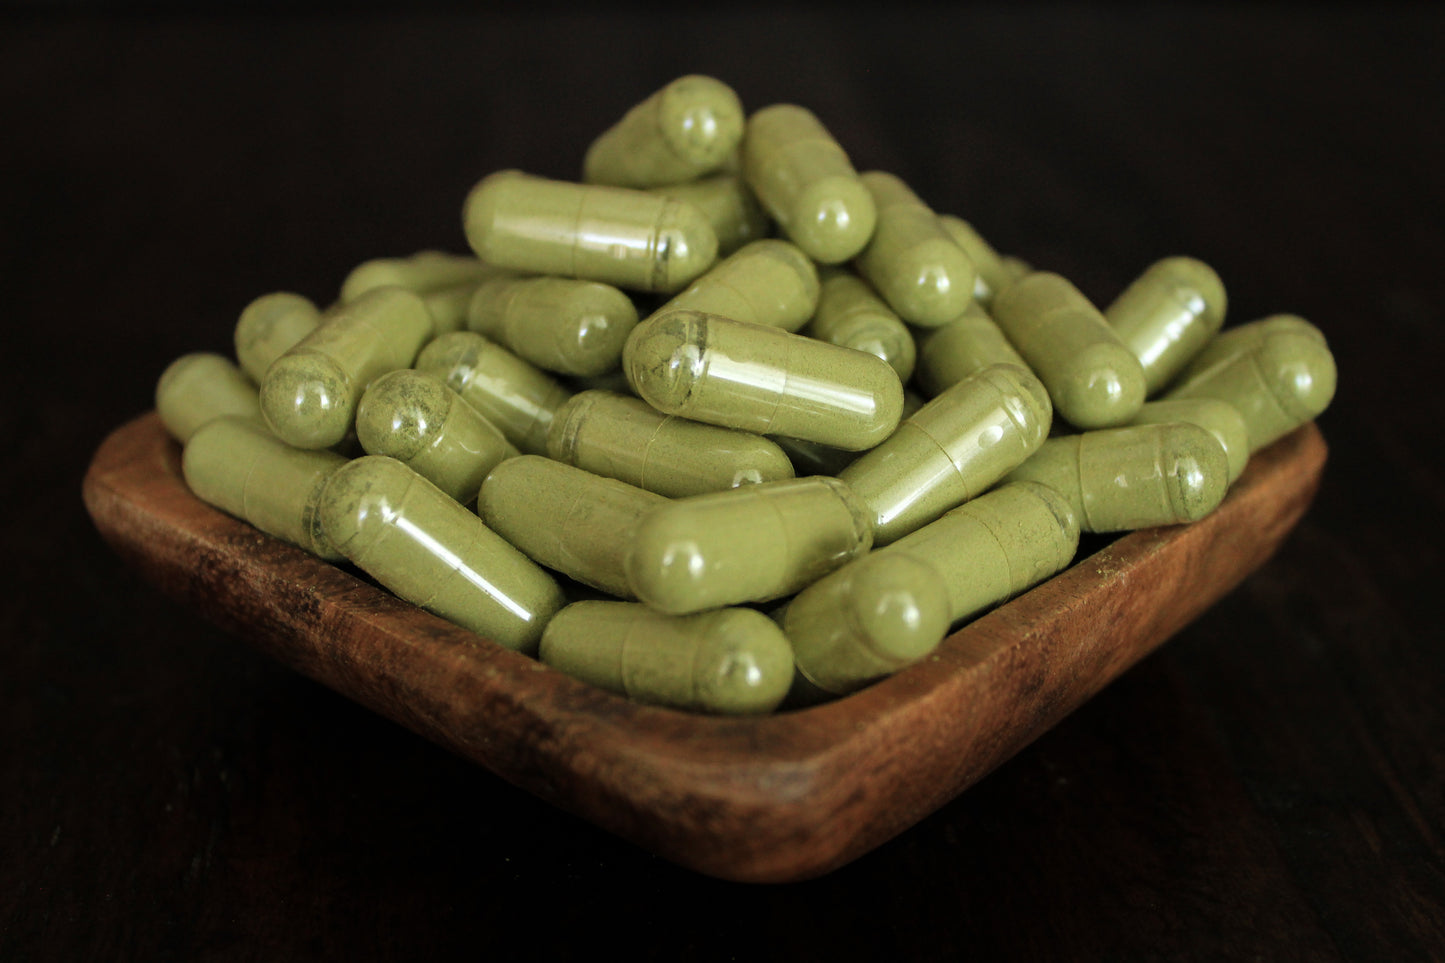 buy super green vein kratom capsules